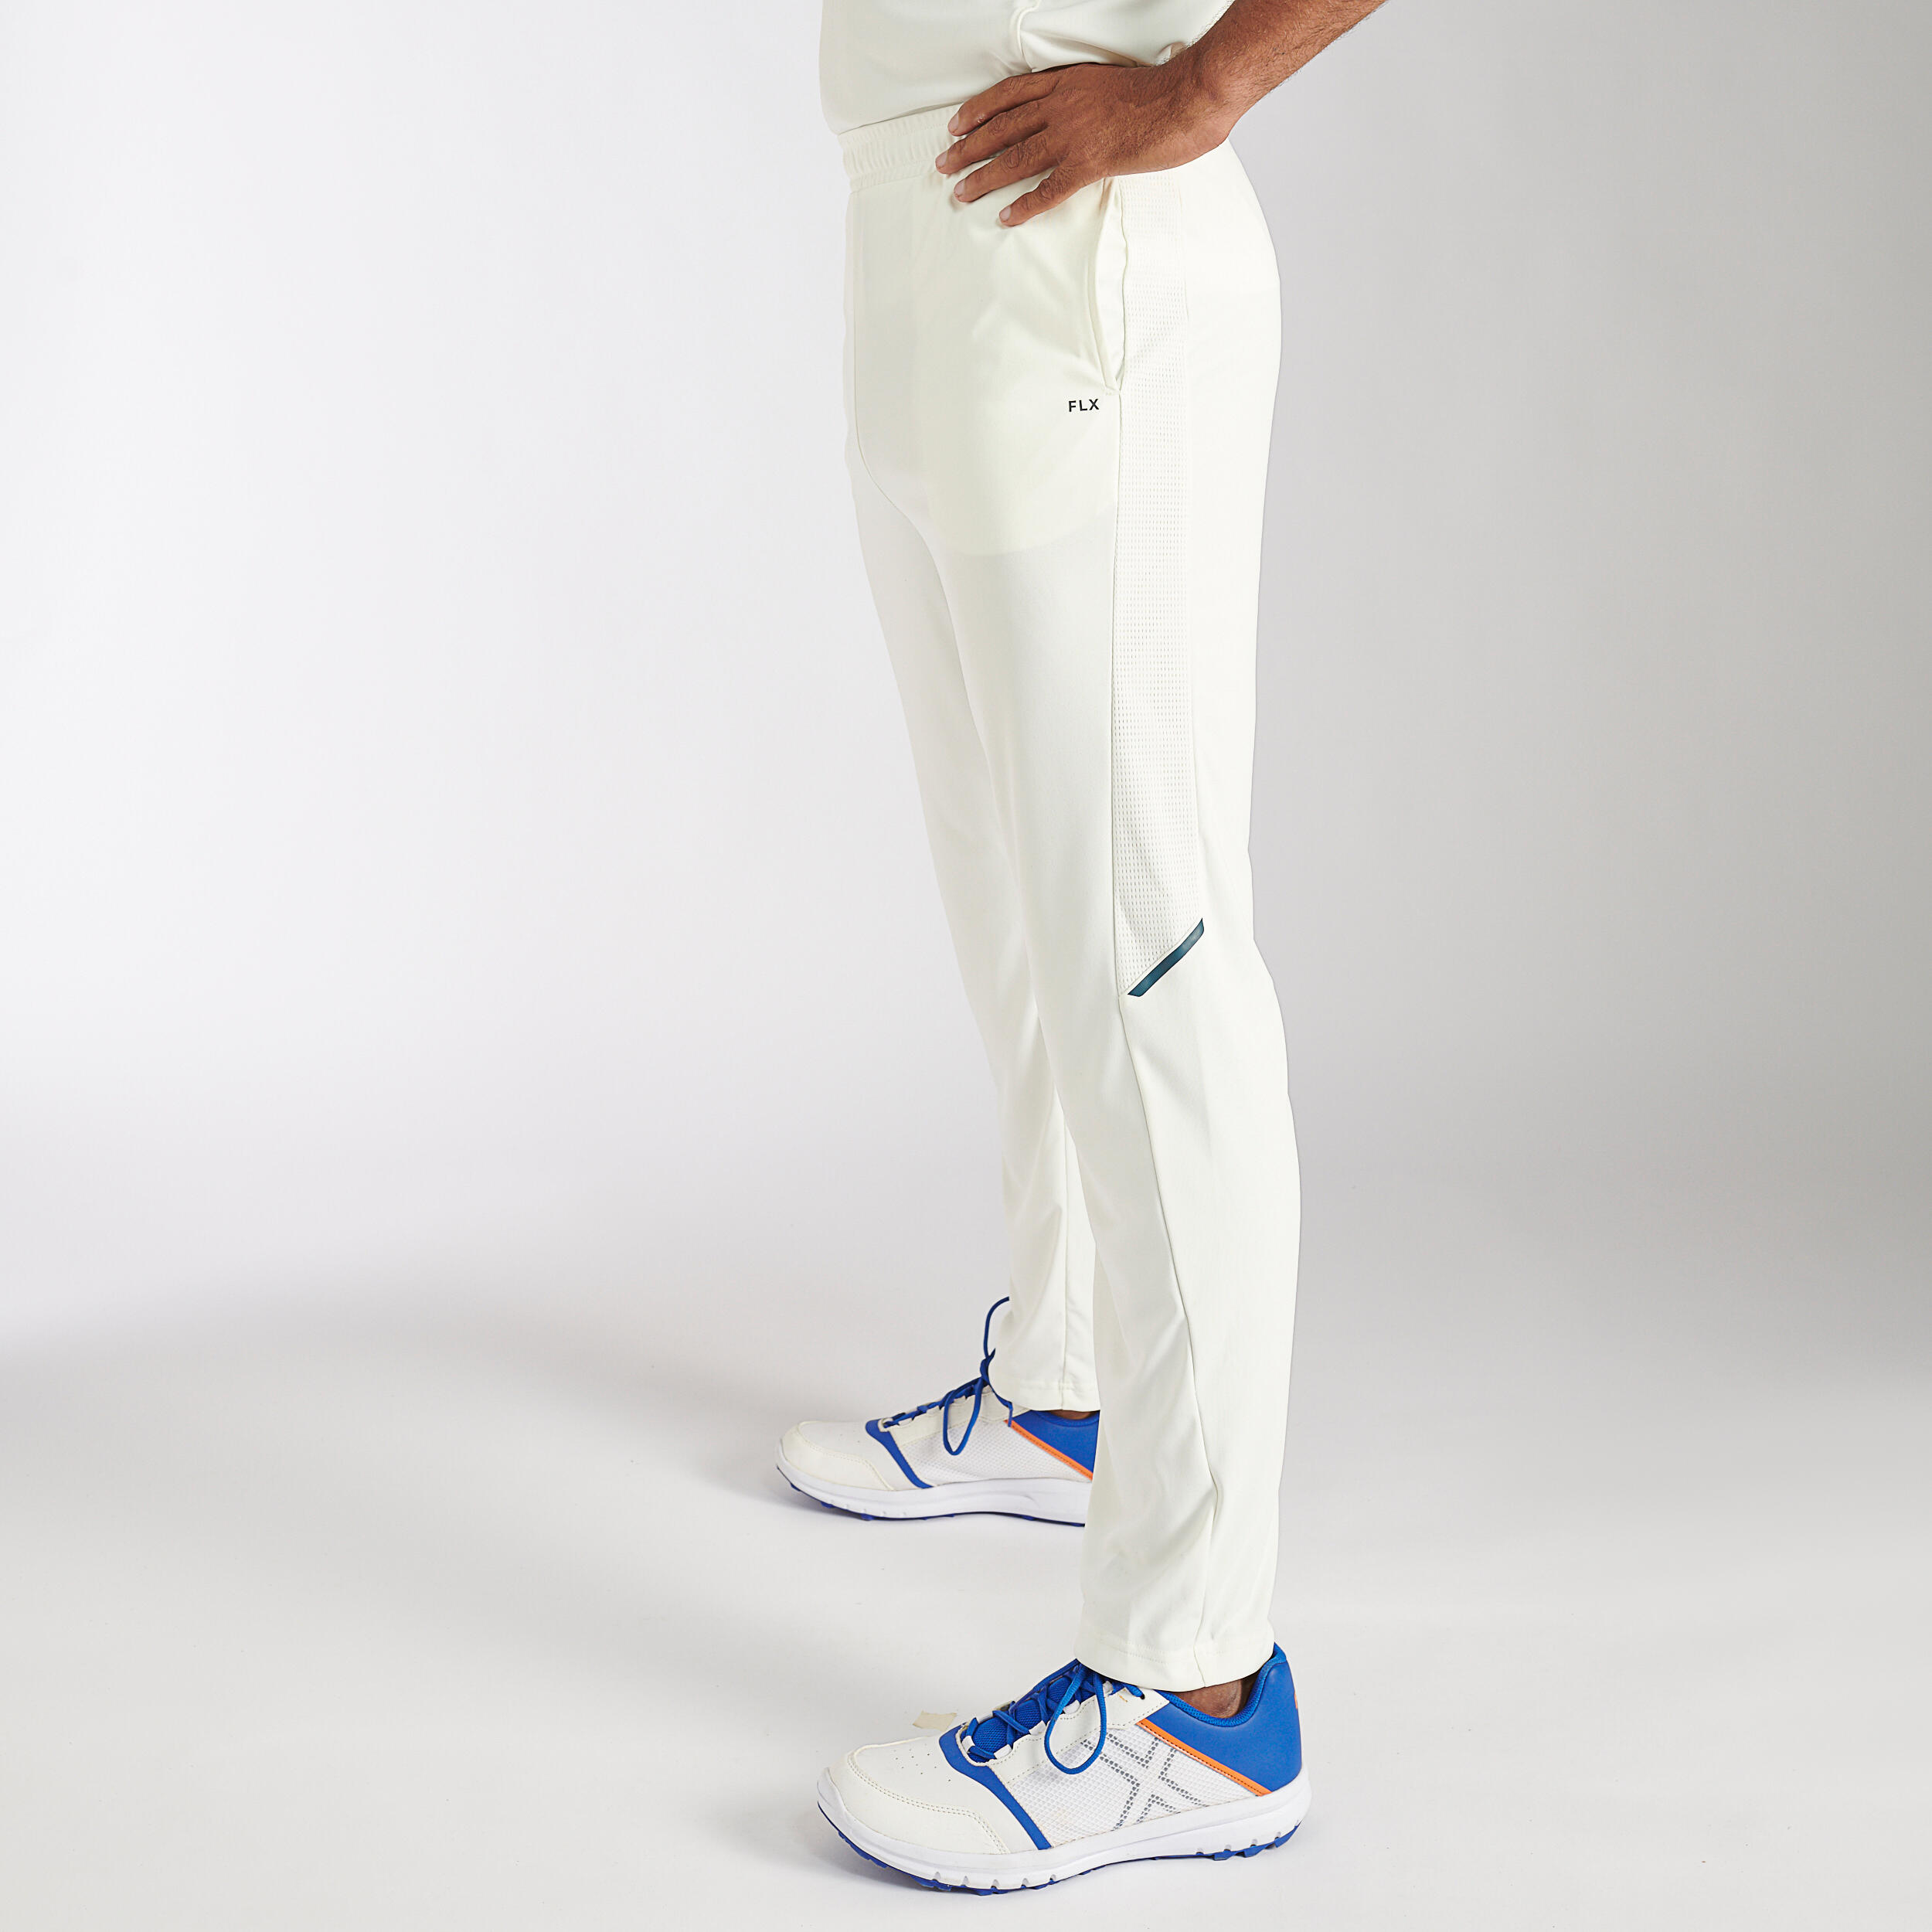 Pantalon de cricket TS 500 – Hommes - FLX